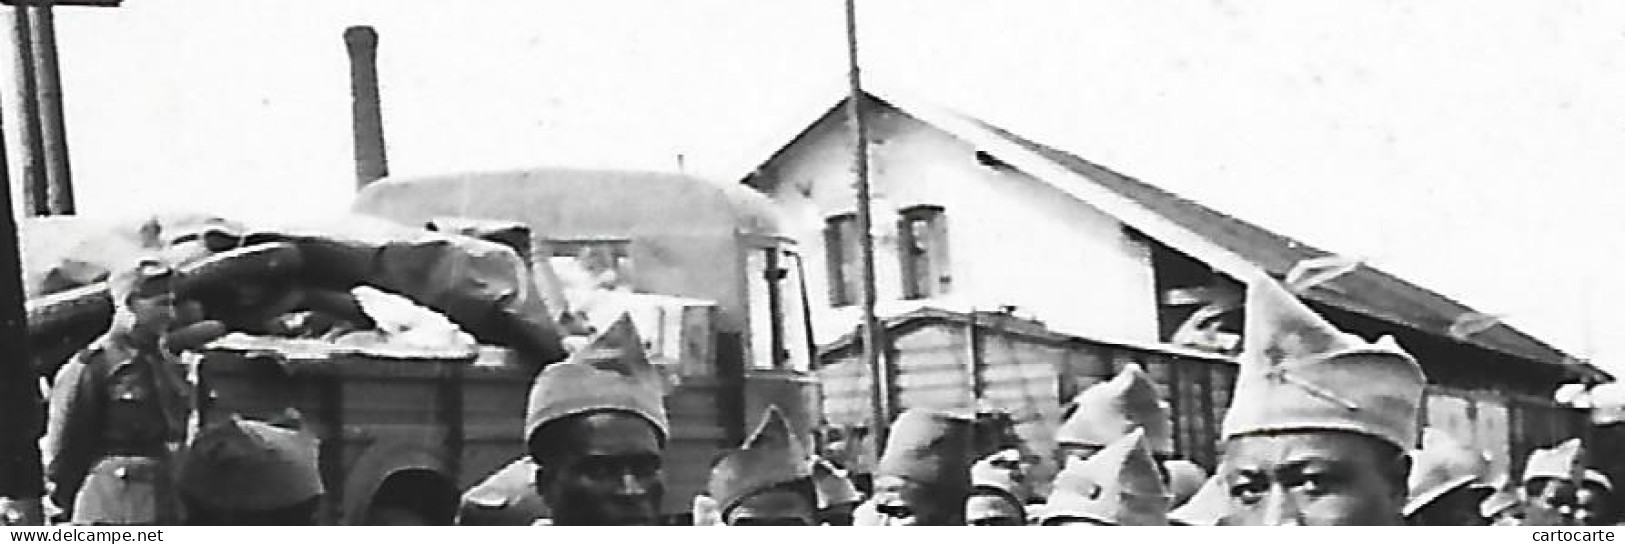 17 144 0424 WW2 WK2 ROYAN ENVIRONS  A SITUER GARE  PRISONNIERS AFICAINS  SOLDATS ALLEMANDS 1940 - Guerra, Militari